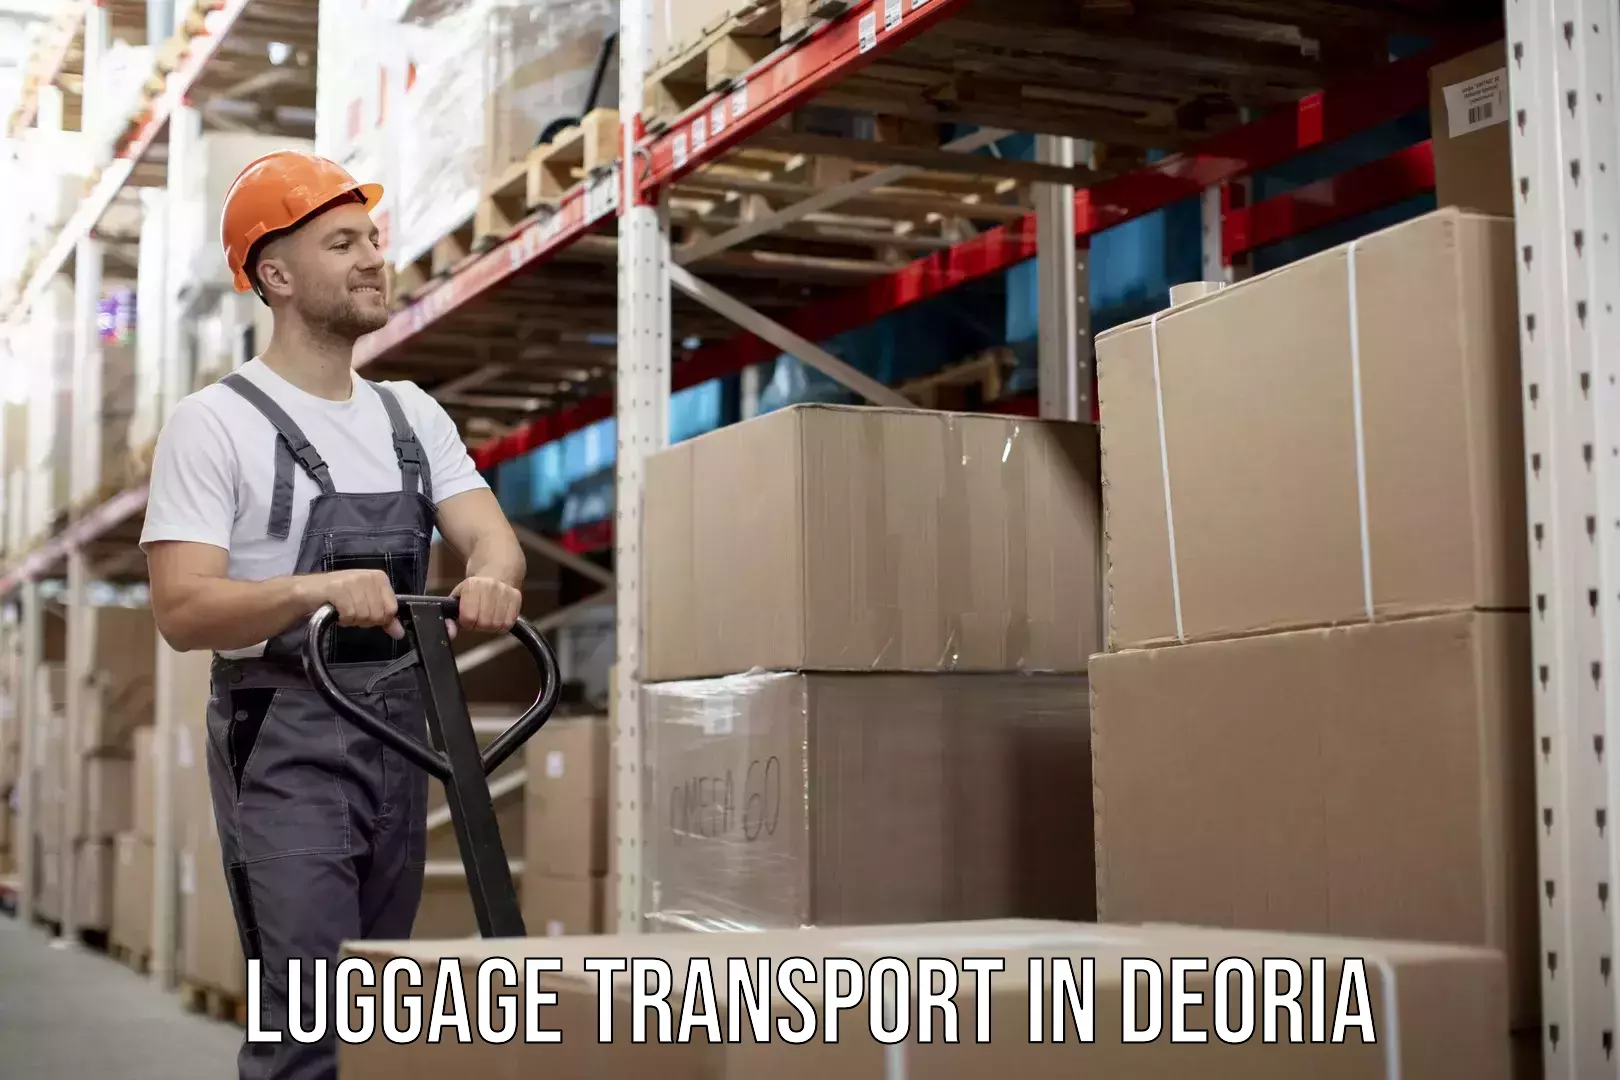 Professional baggage transport in Deoria